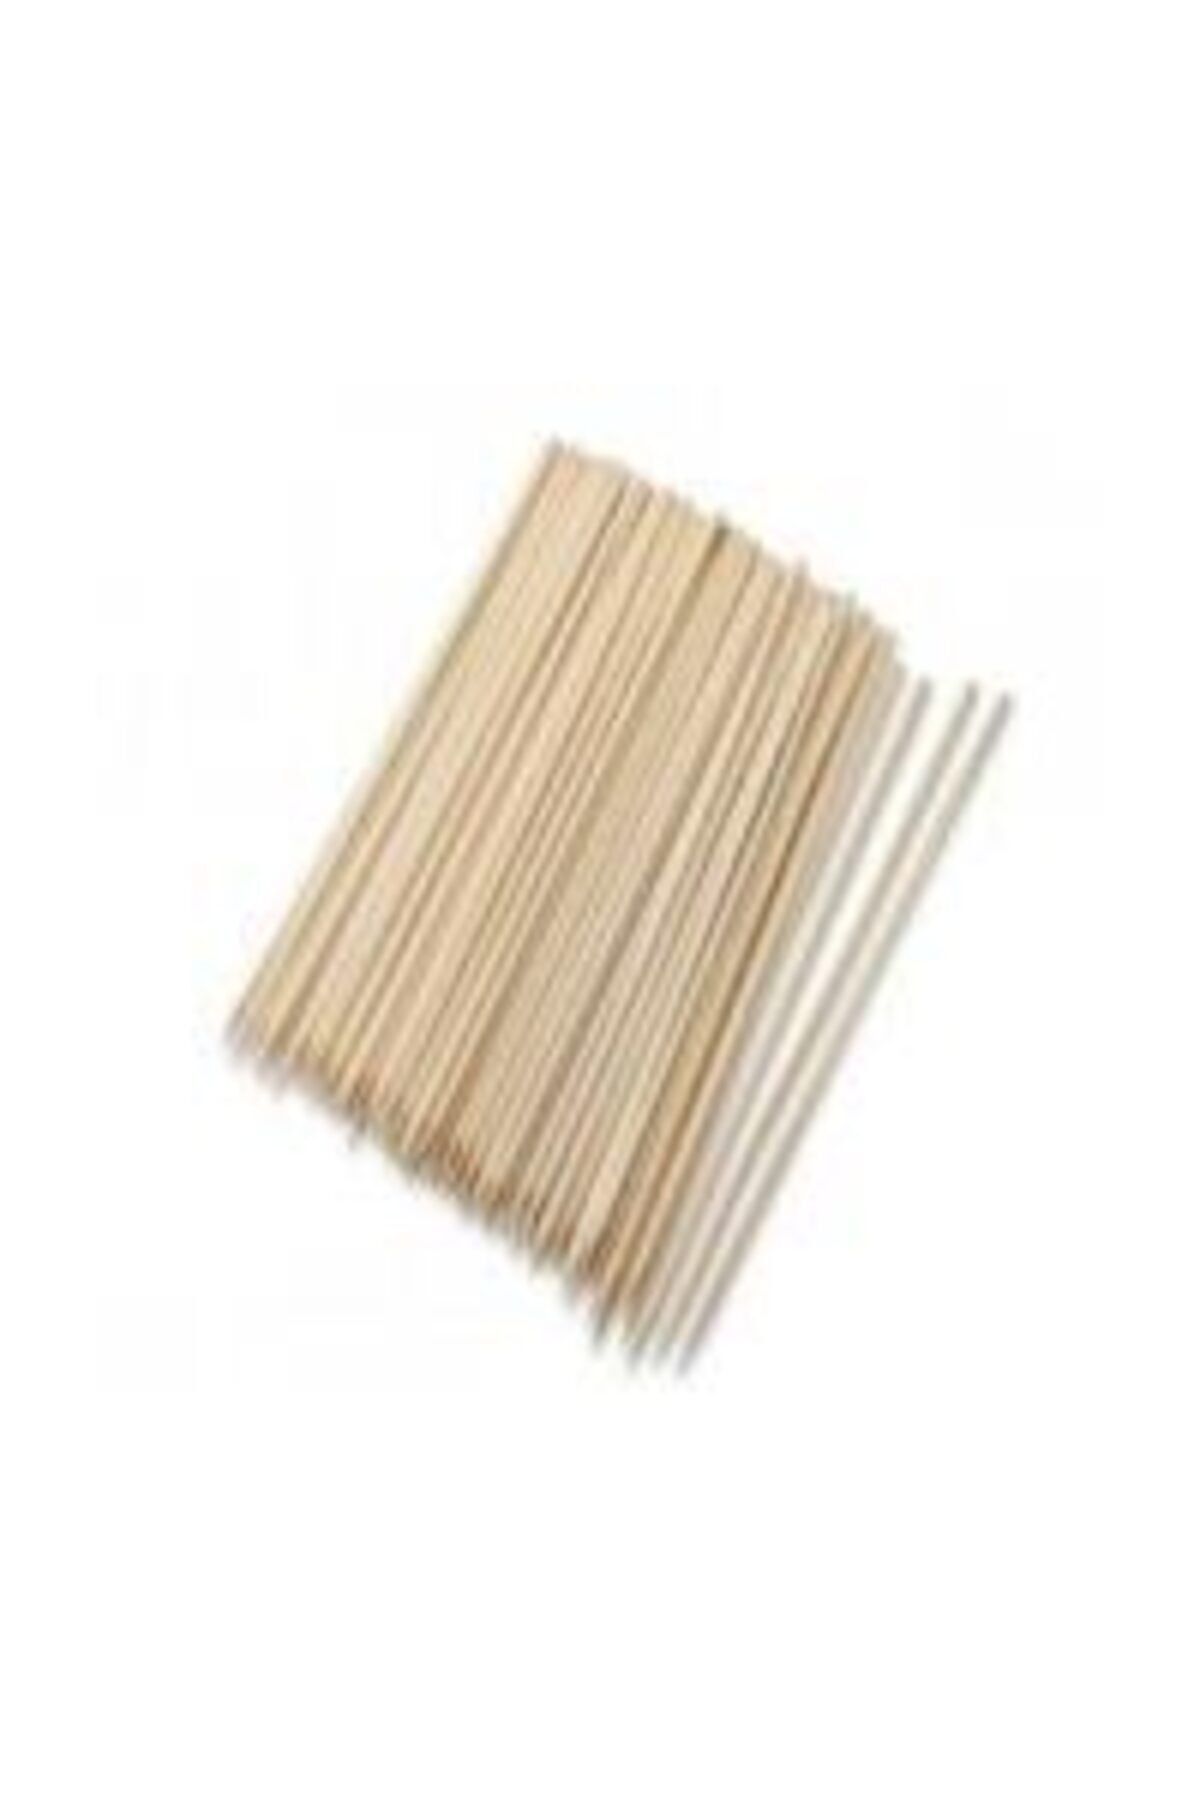 Ethex Bambu Çöp Şiş 20 cm. - 100 Adet